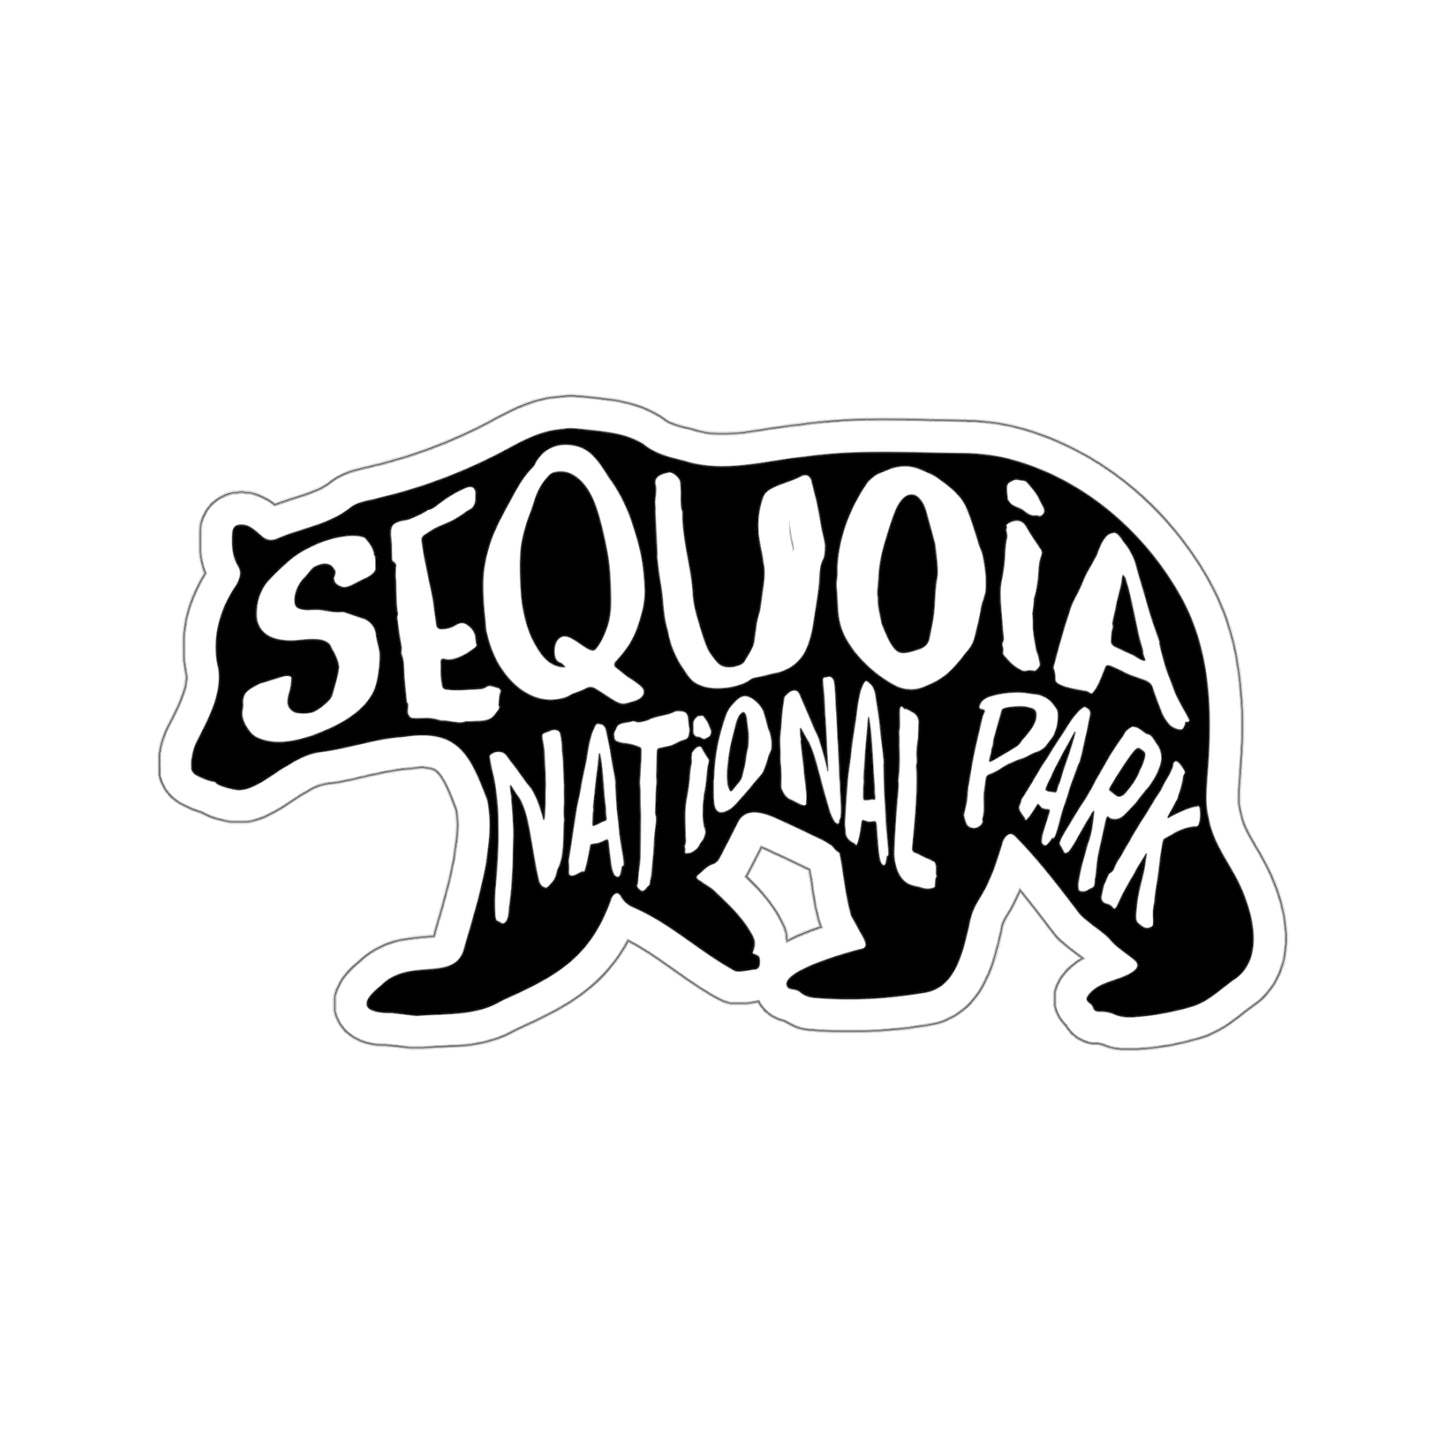 Sequoia National Park Sticker - Black Bear